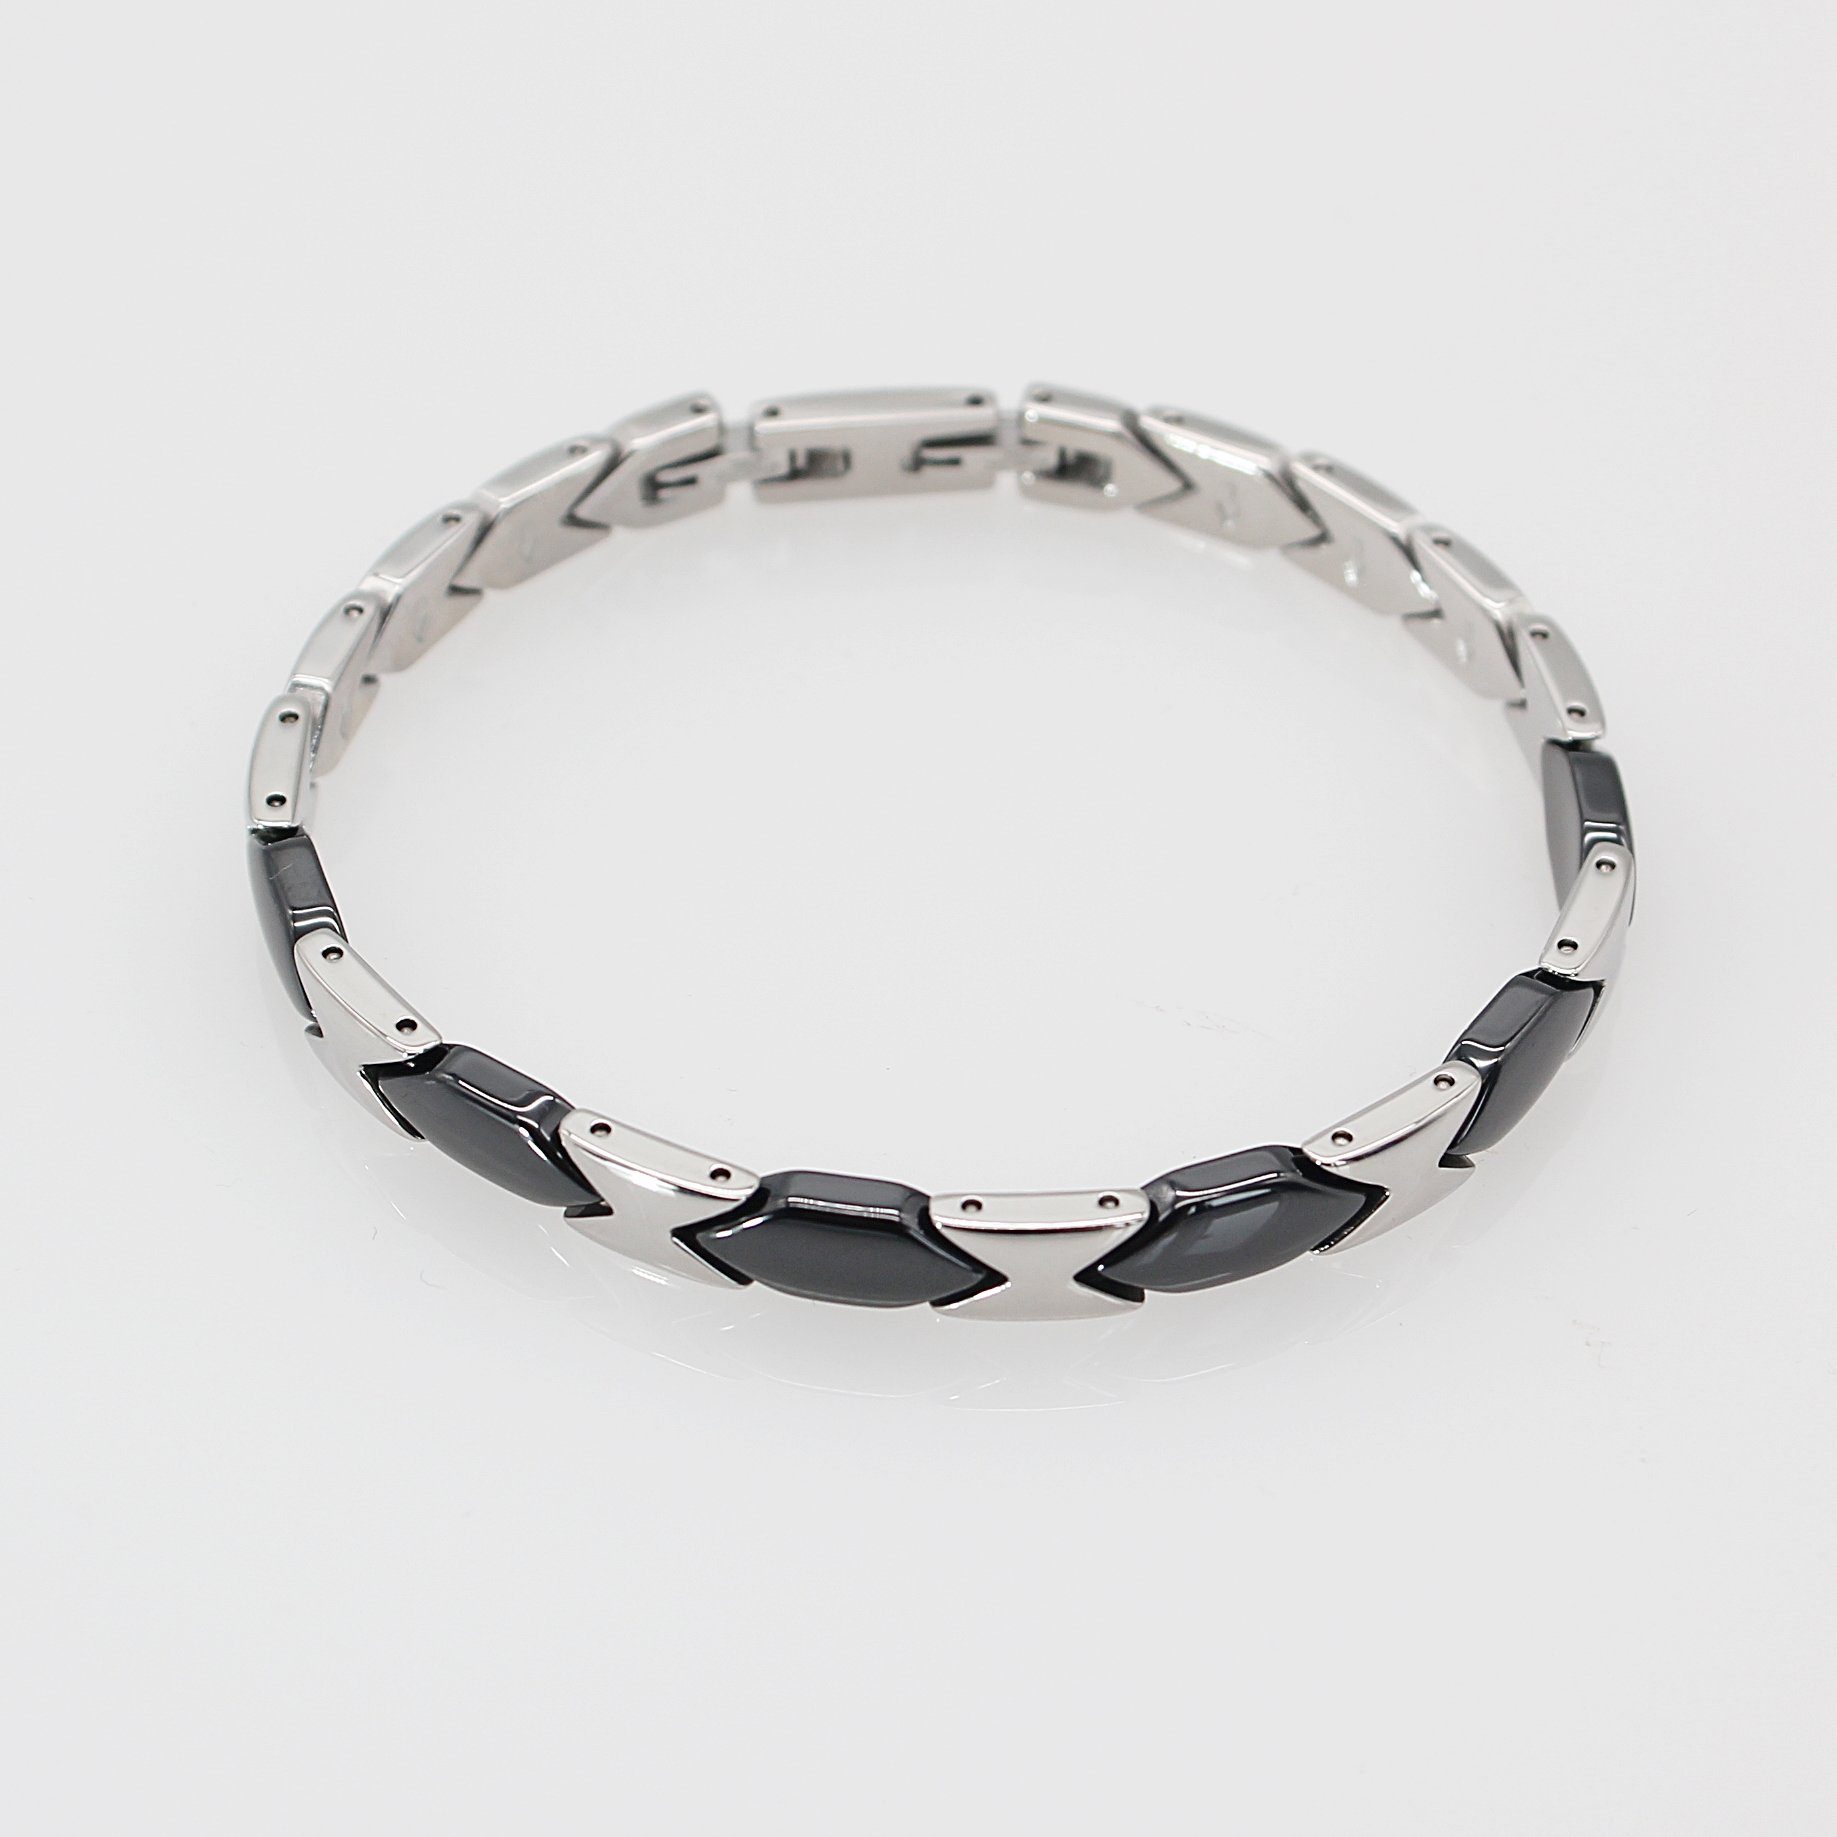 ELLAWIL Gliederarmband Edelstahl- Keramikarmband Handgelenkkette  Damenarmband Schwarz Silber (Armbandlänge 19 cm, Breite 6 mm x 3 mm),  inklusive Geschenkschachtel